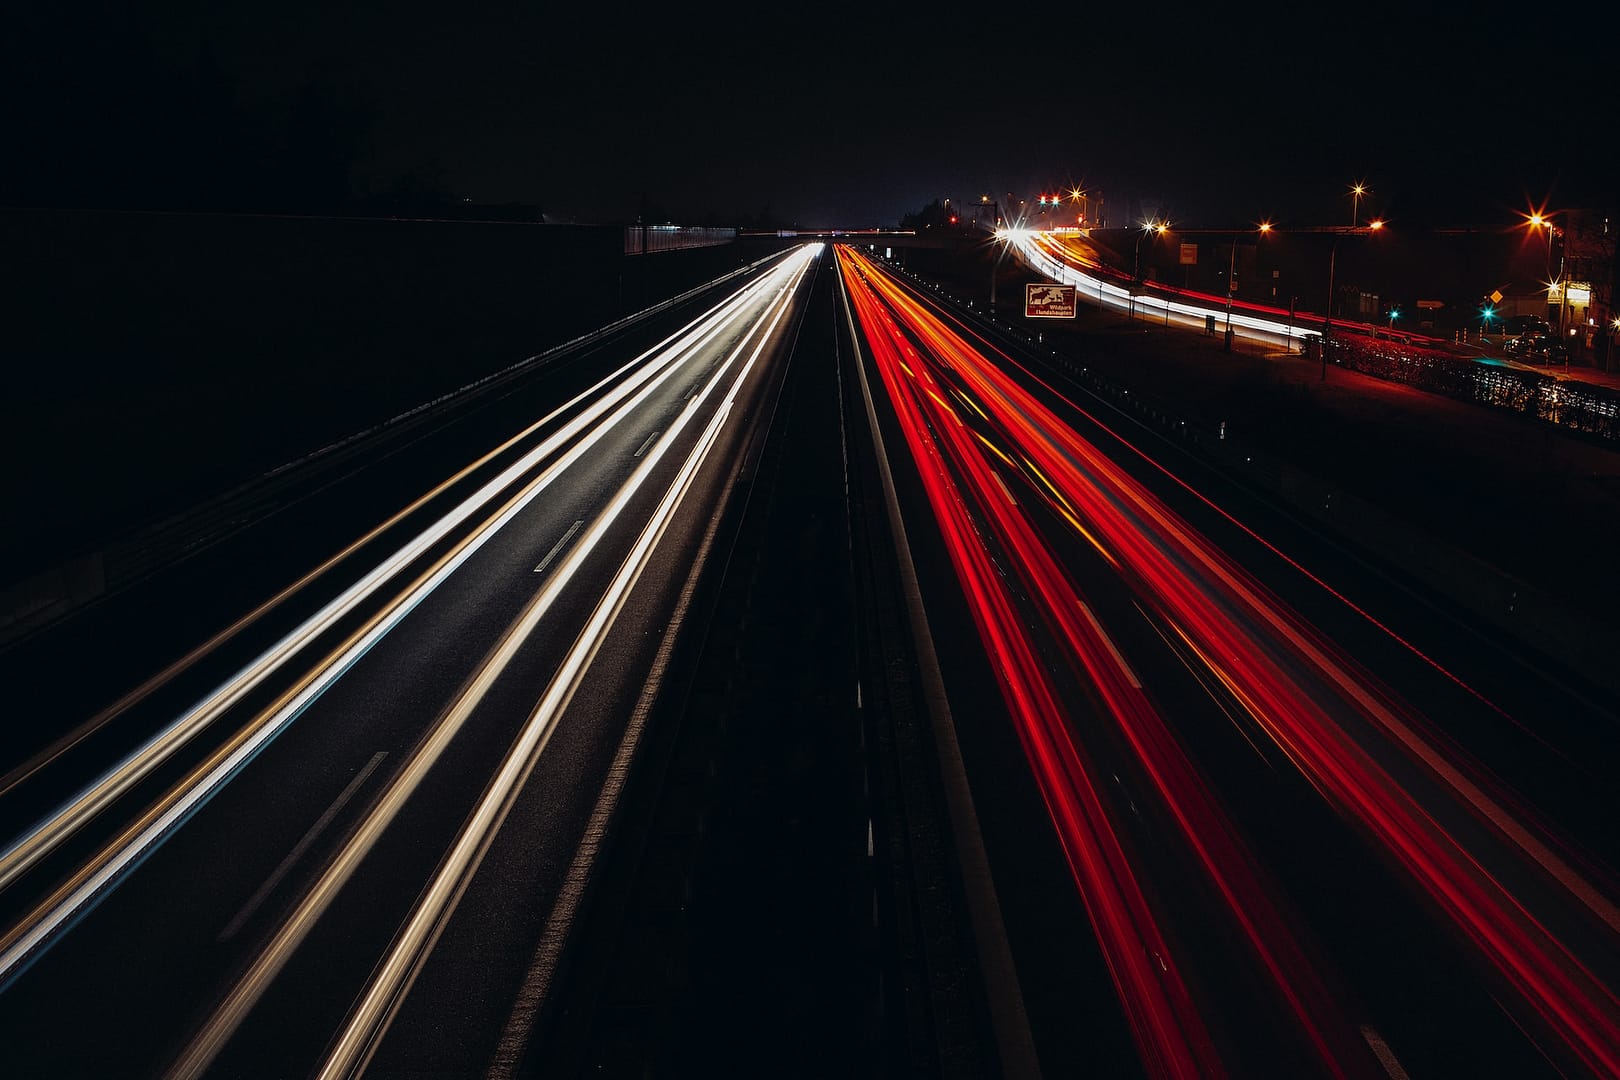 blurred car lights on a motorway